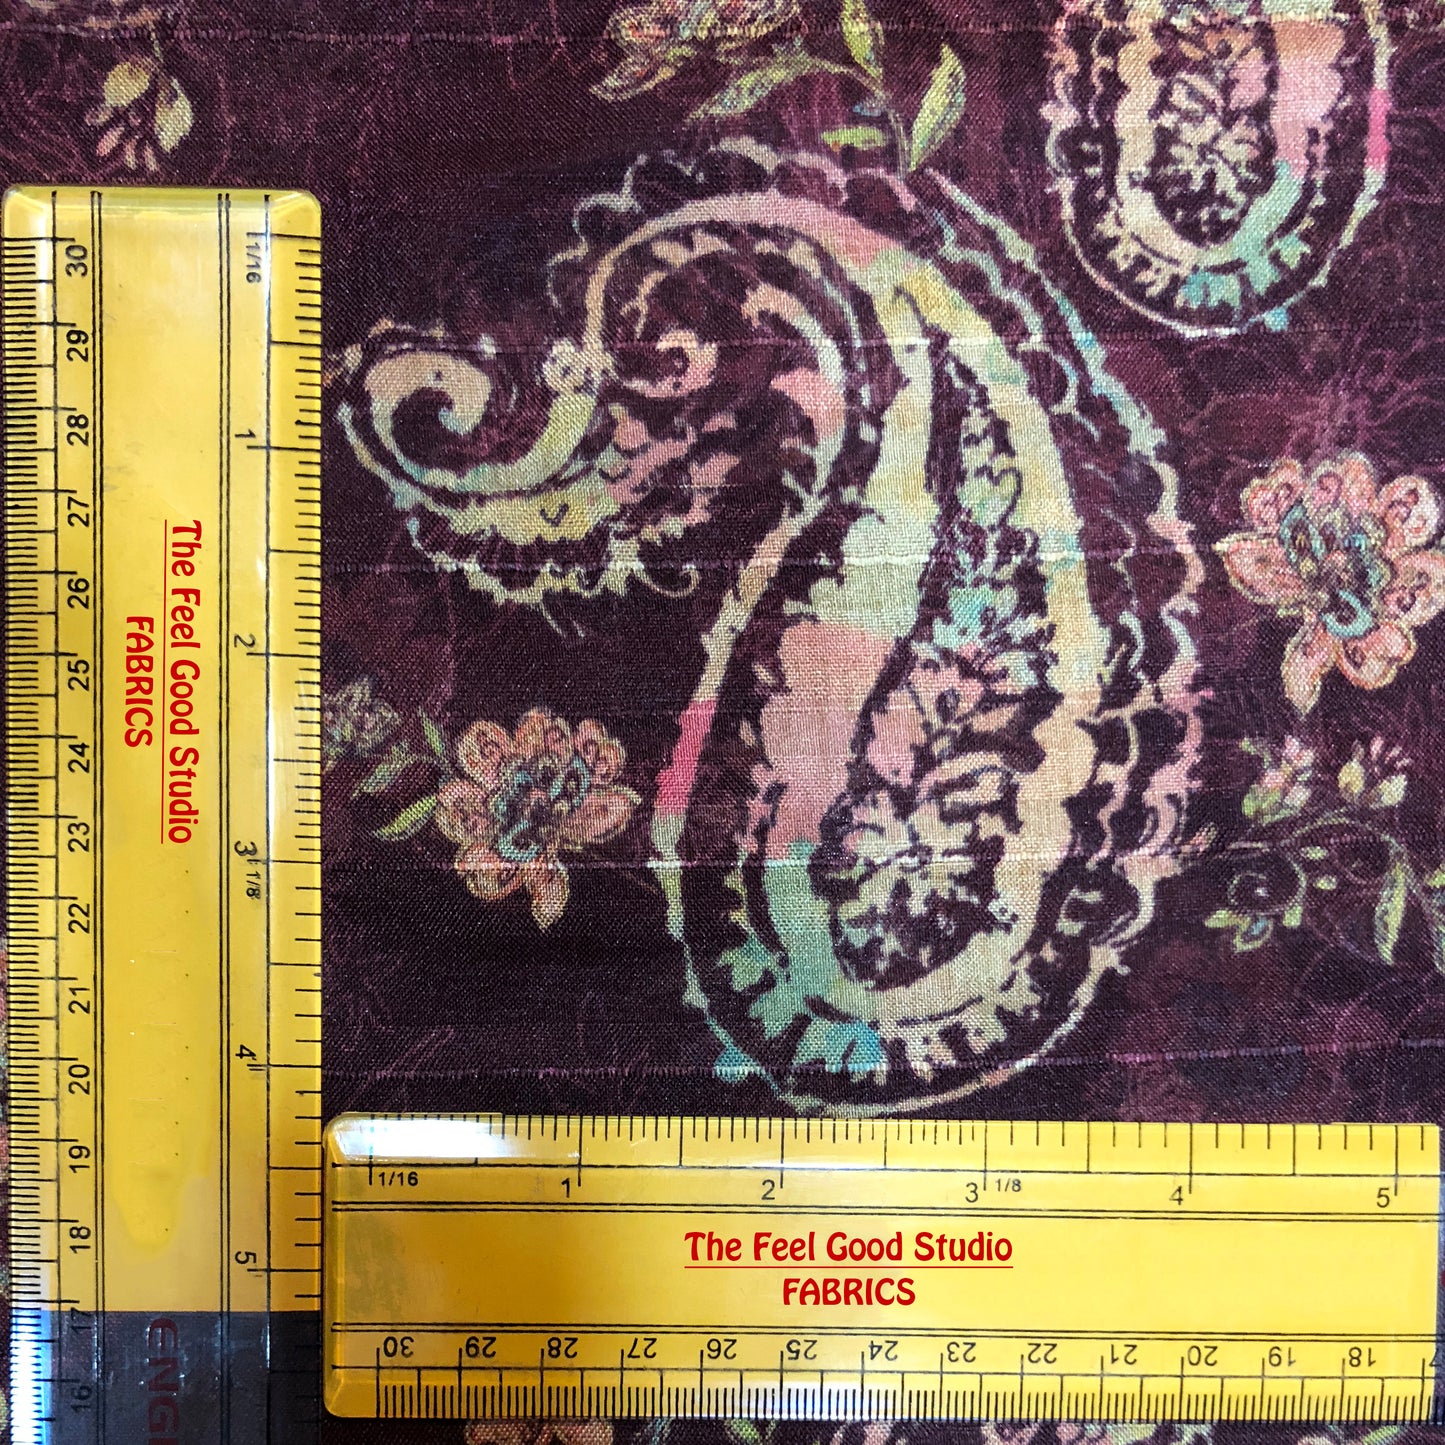 Paisley Print On Purple Tussar Fabric